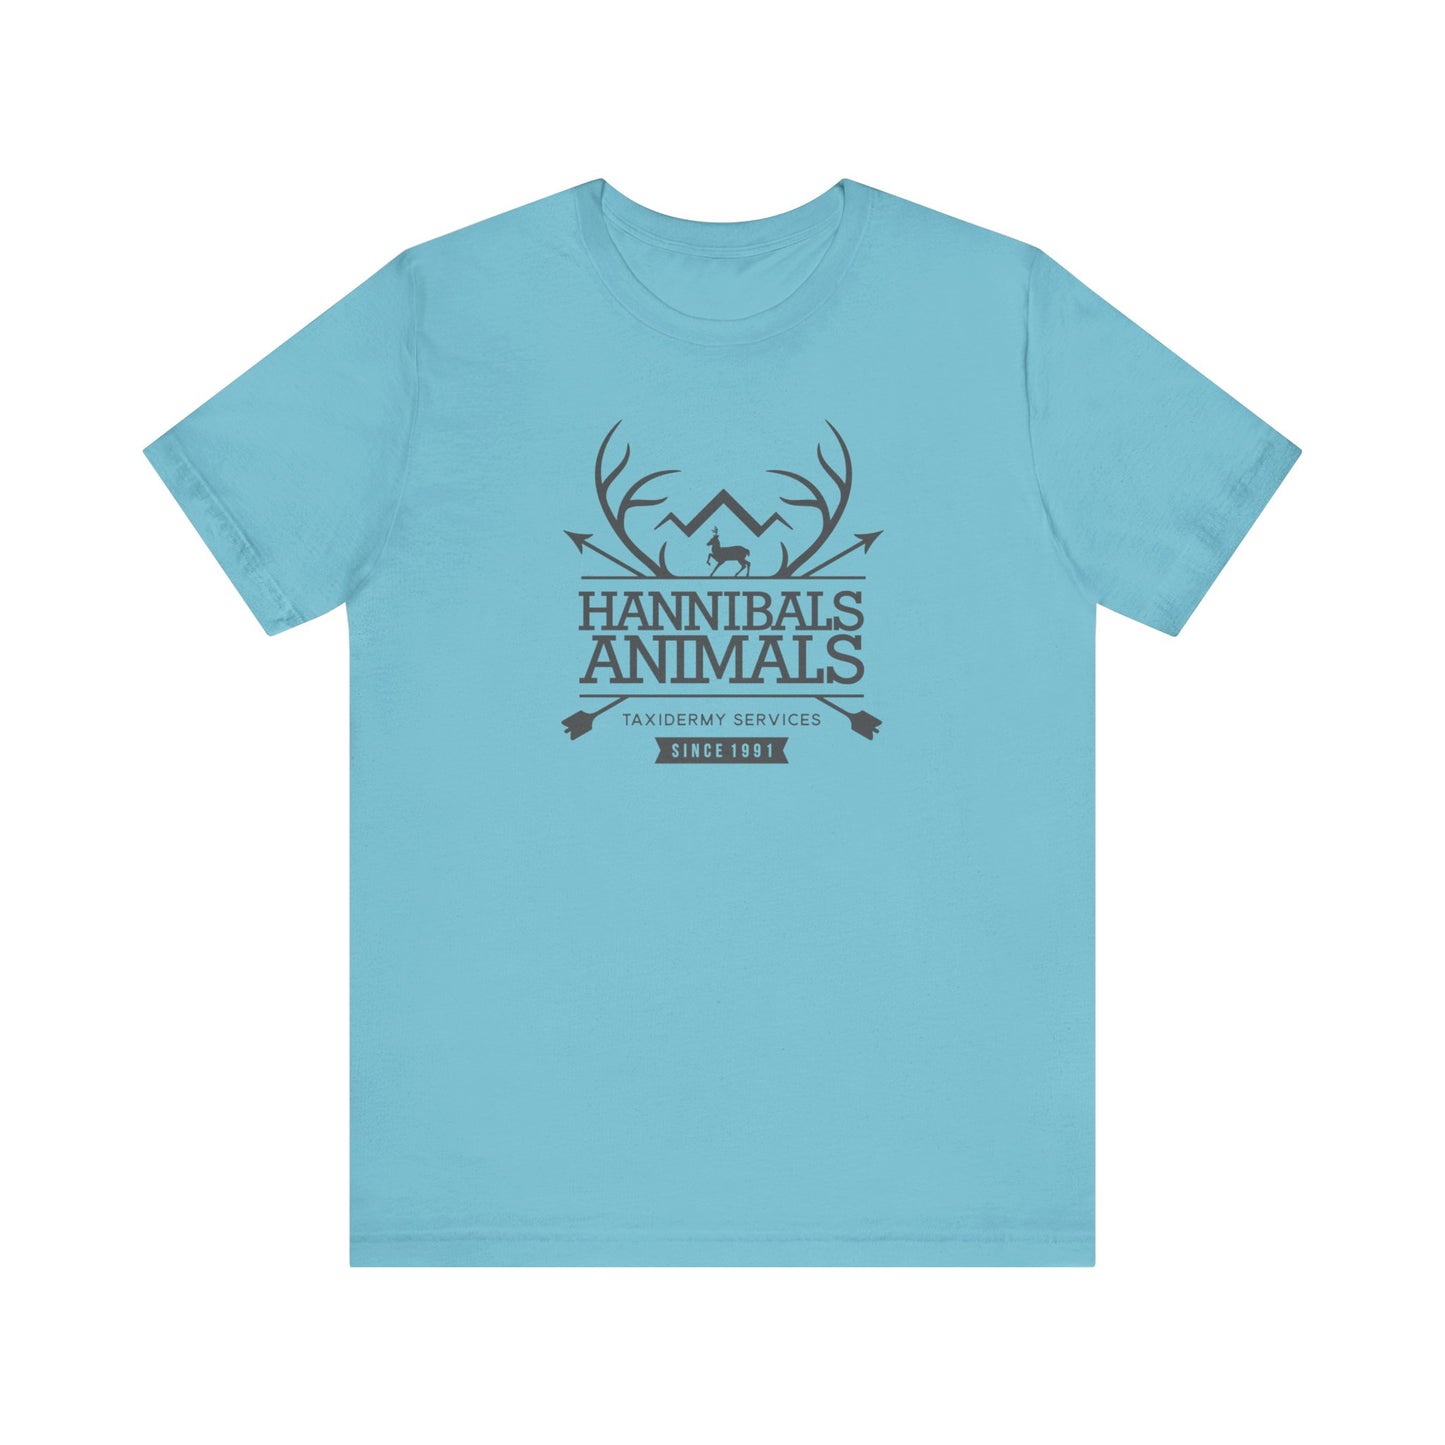 Hannibal's Animals